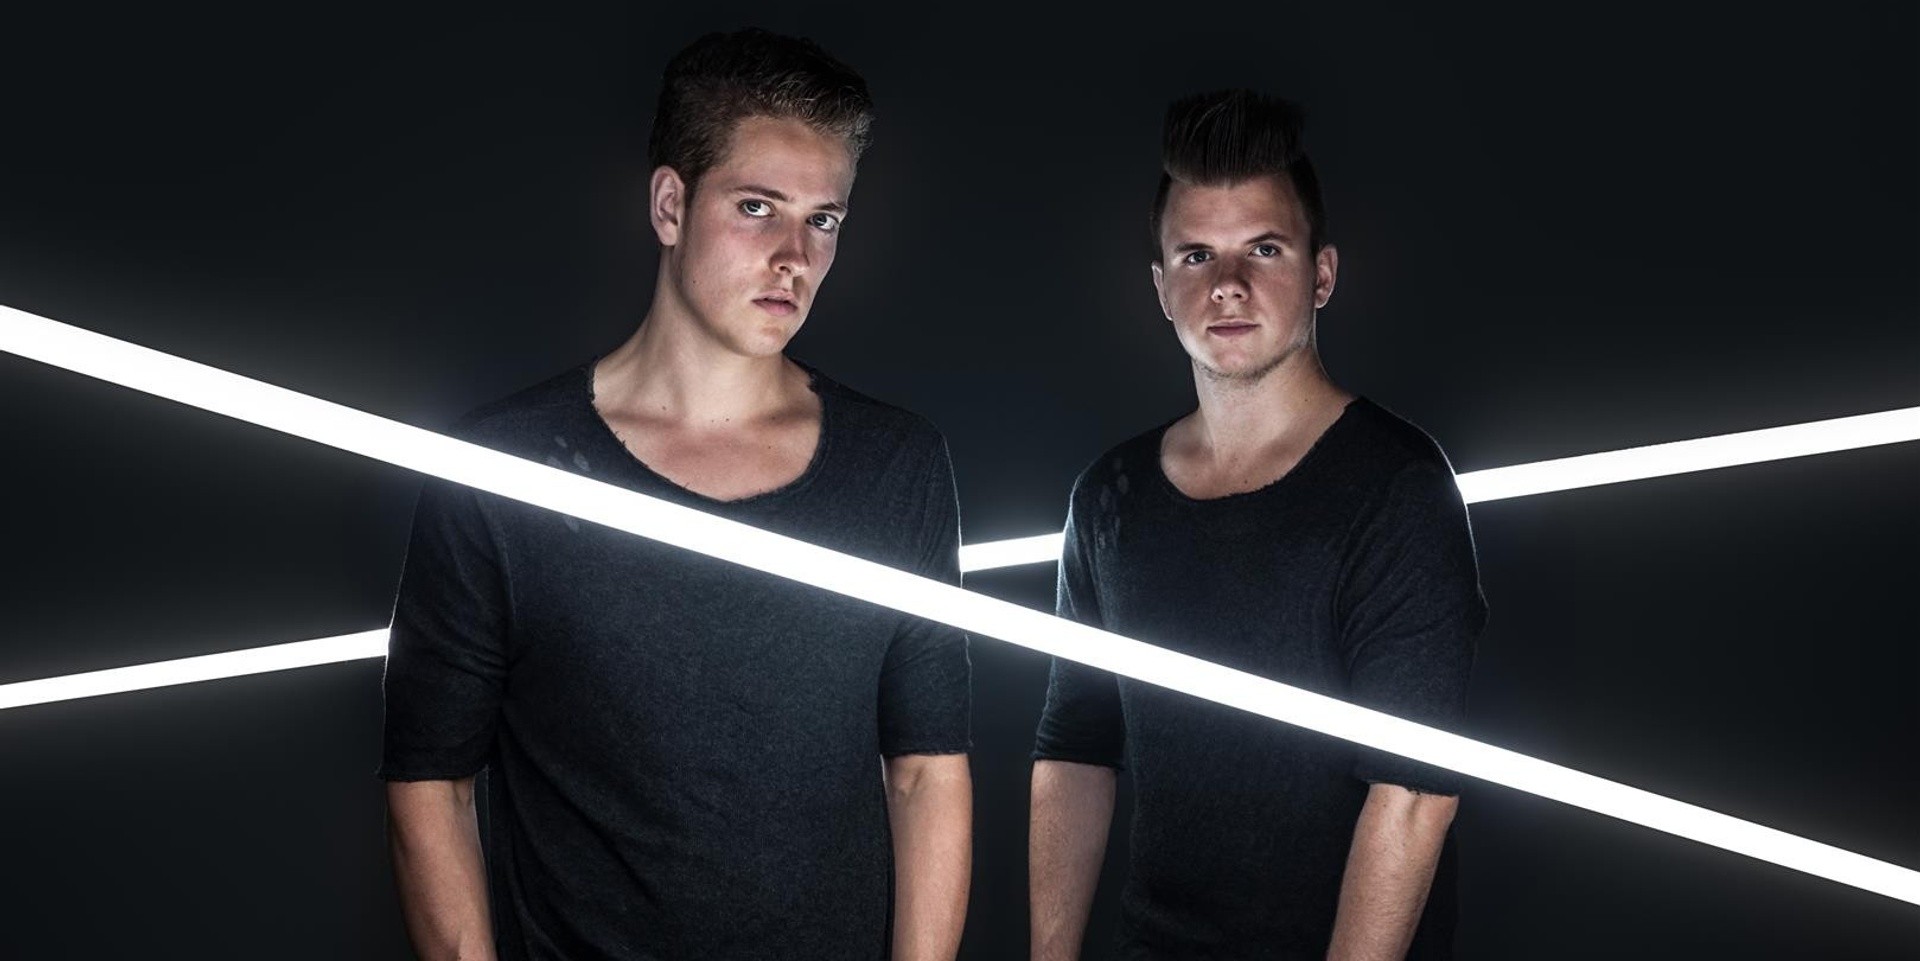 Dutch EDM duo Sick Individuals to perform in Singapore